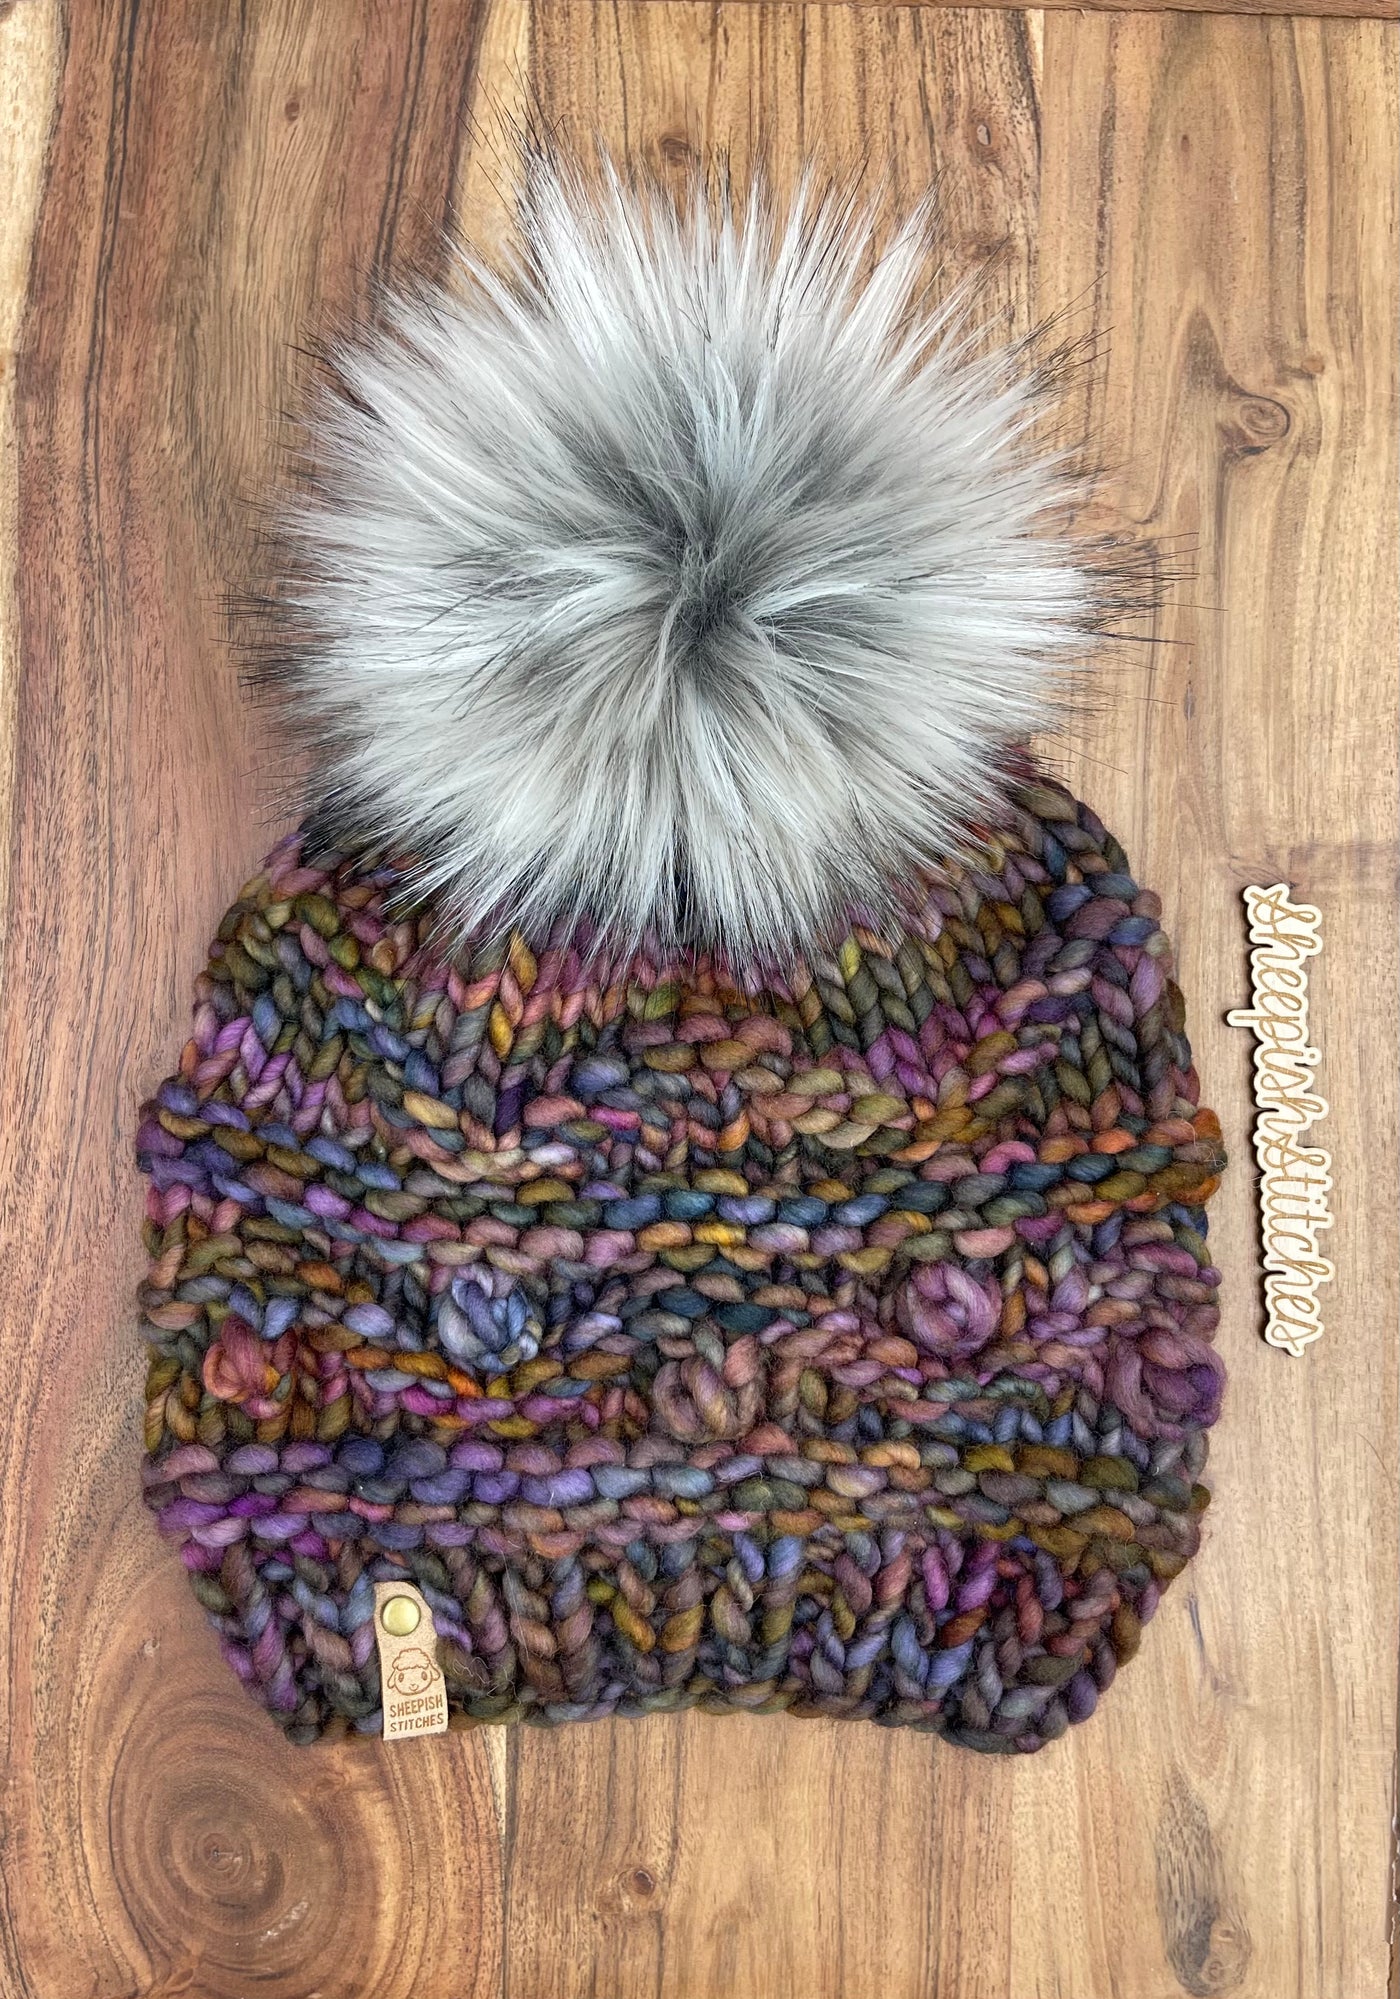 Deep jewel mix- Merino Wool Knit Hat with Faux Fur Pom Pom, Hand Knit Luxury Beanie, Ethically Sourced Merino Wool Toque